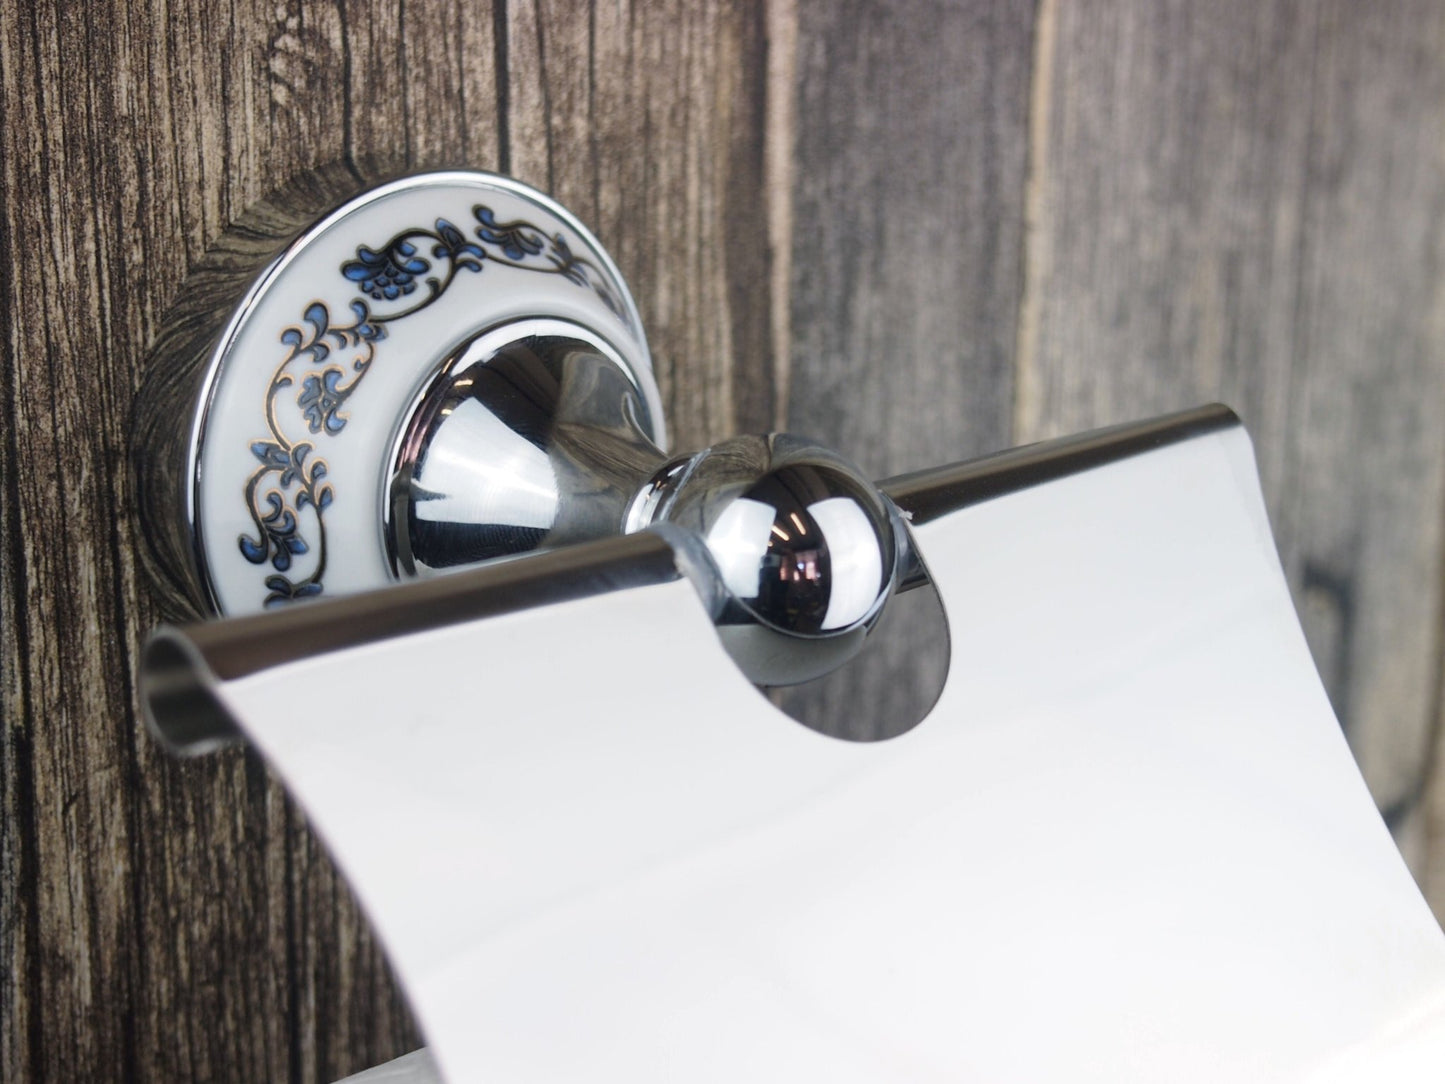 Rustic Bathroom Accessories - Toilet Paper Holder Lavande Chrome - |VESIMI Design| Luxury and Rustic bathrooms online